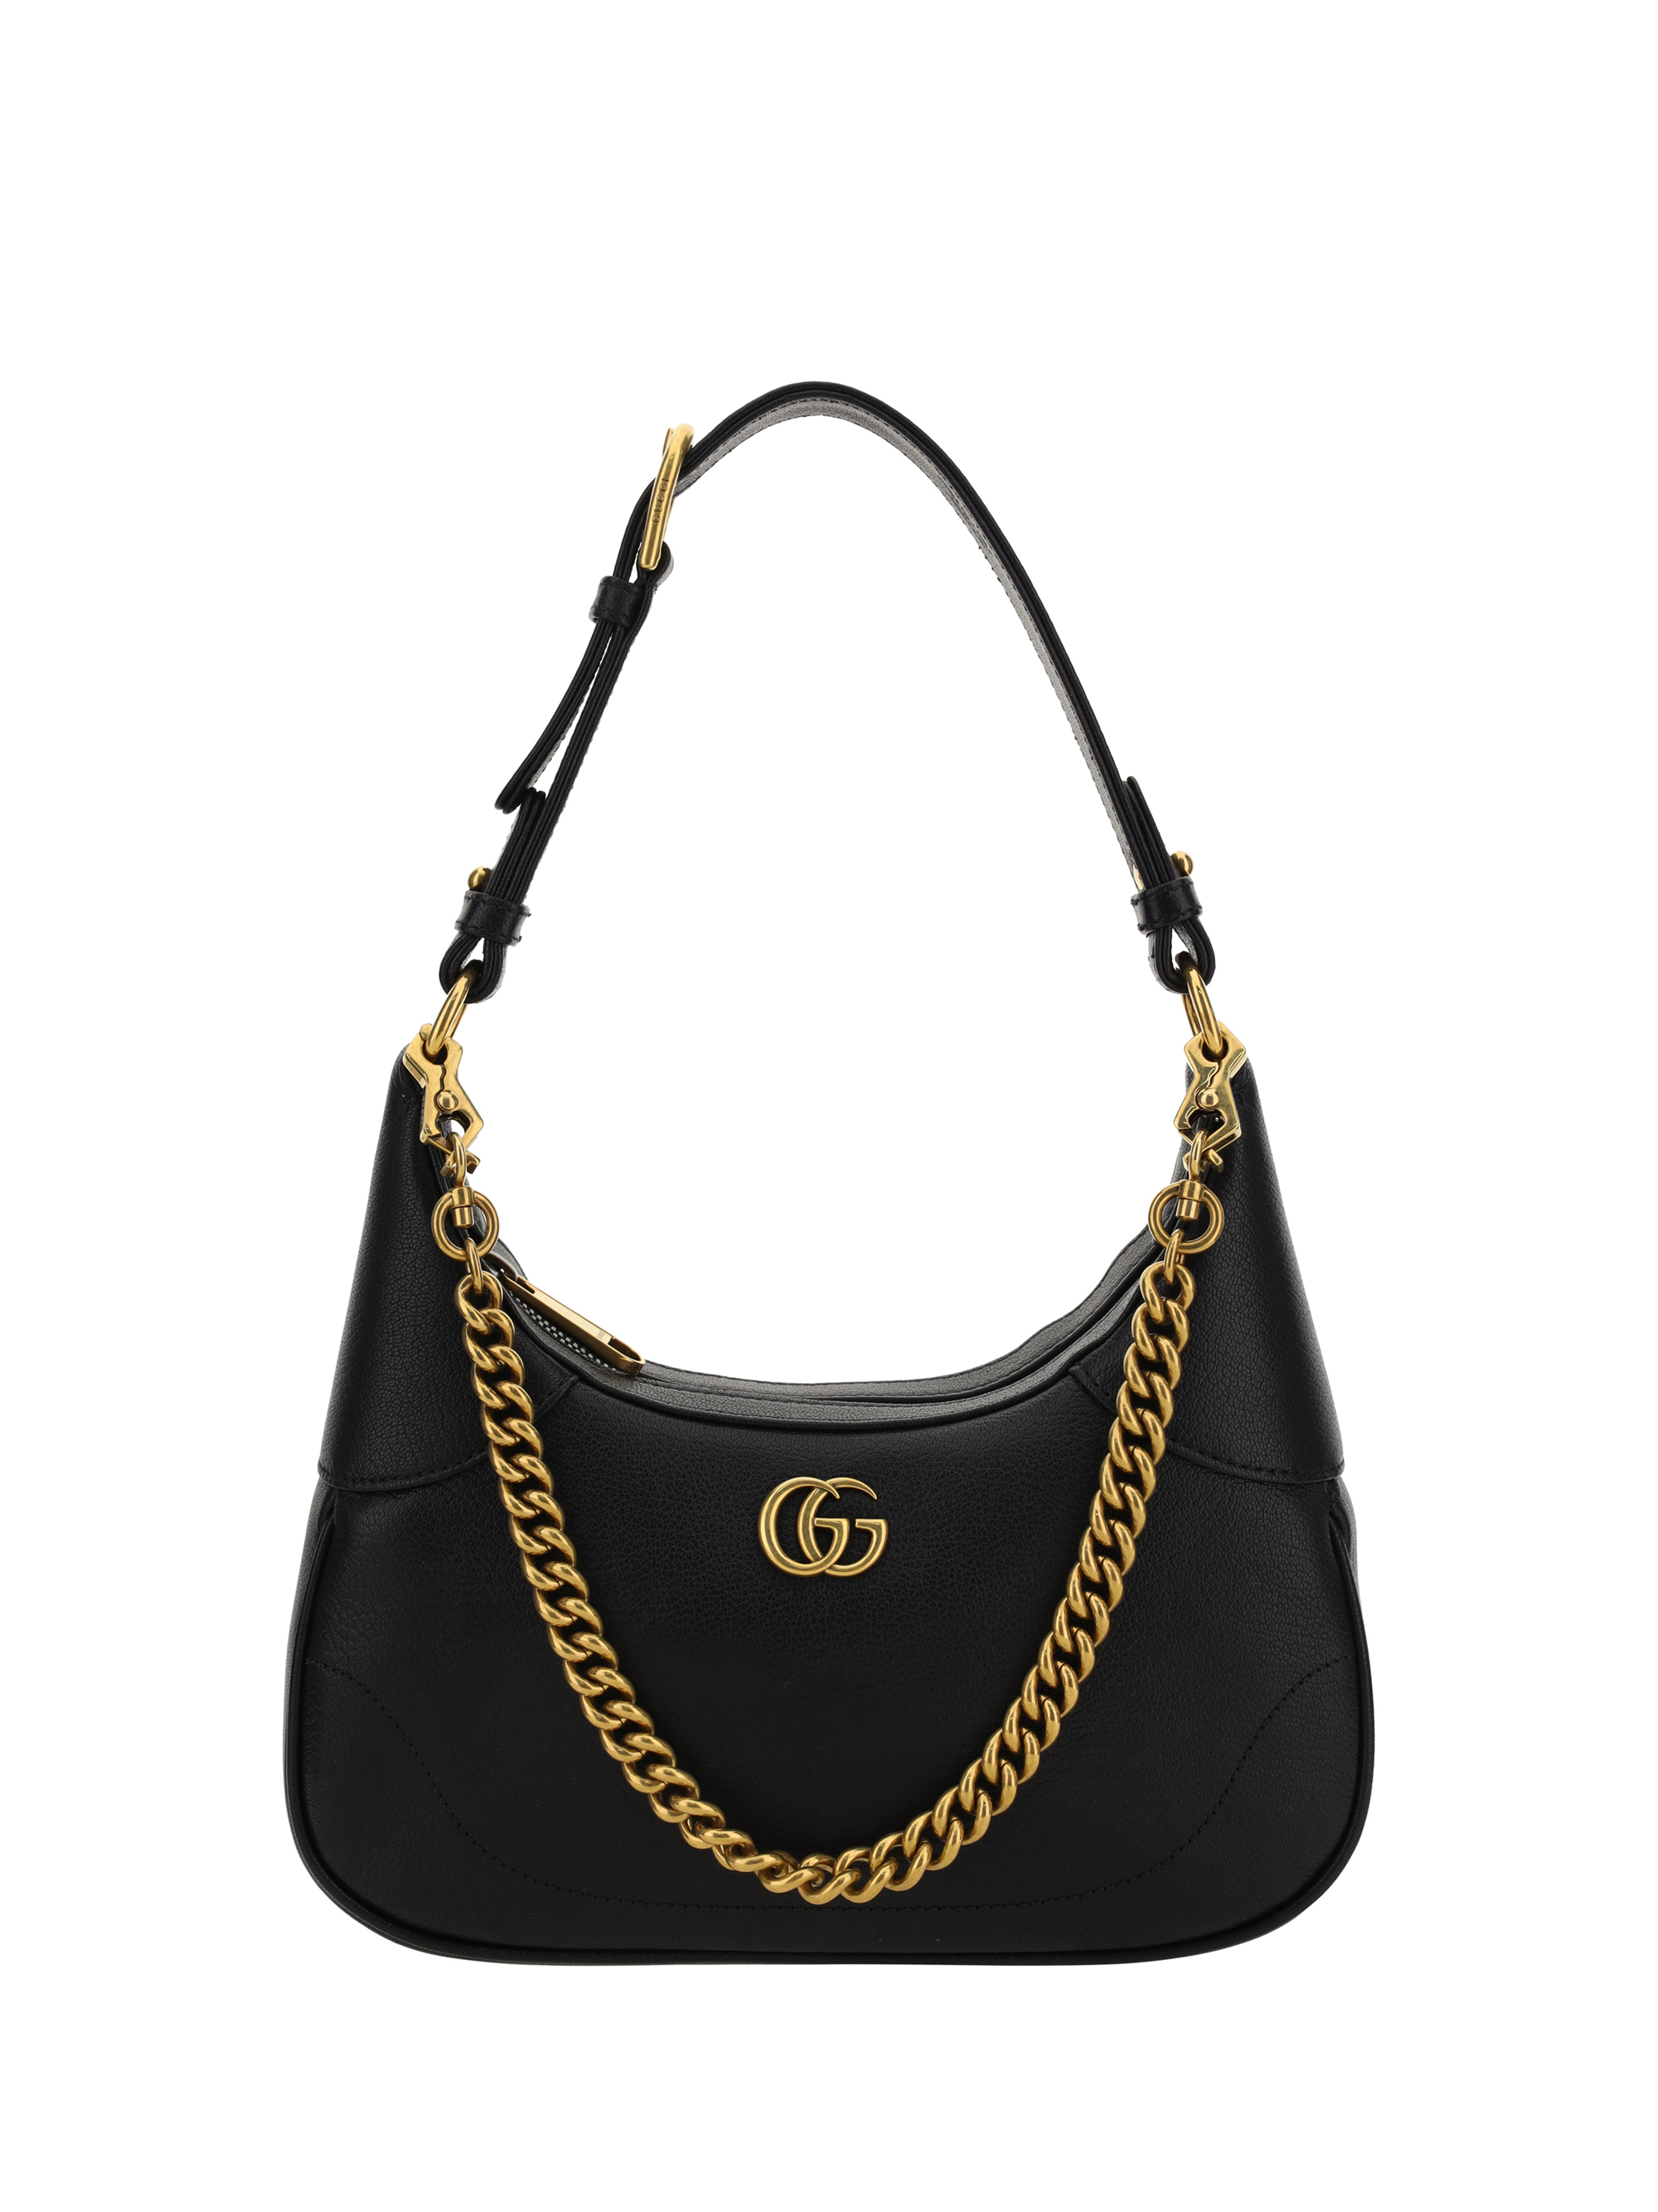 Aphrodite gg leather shoulder bag - Gucci - Women